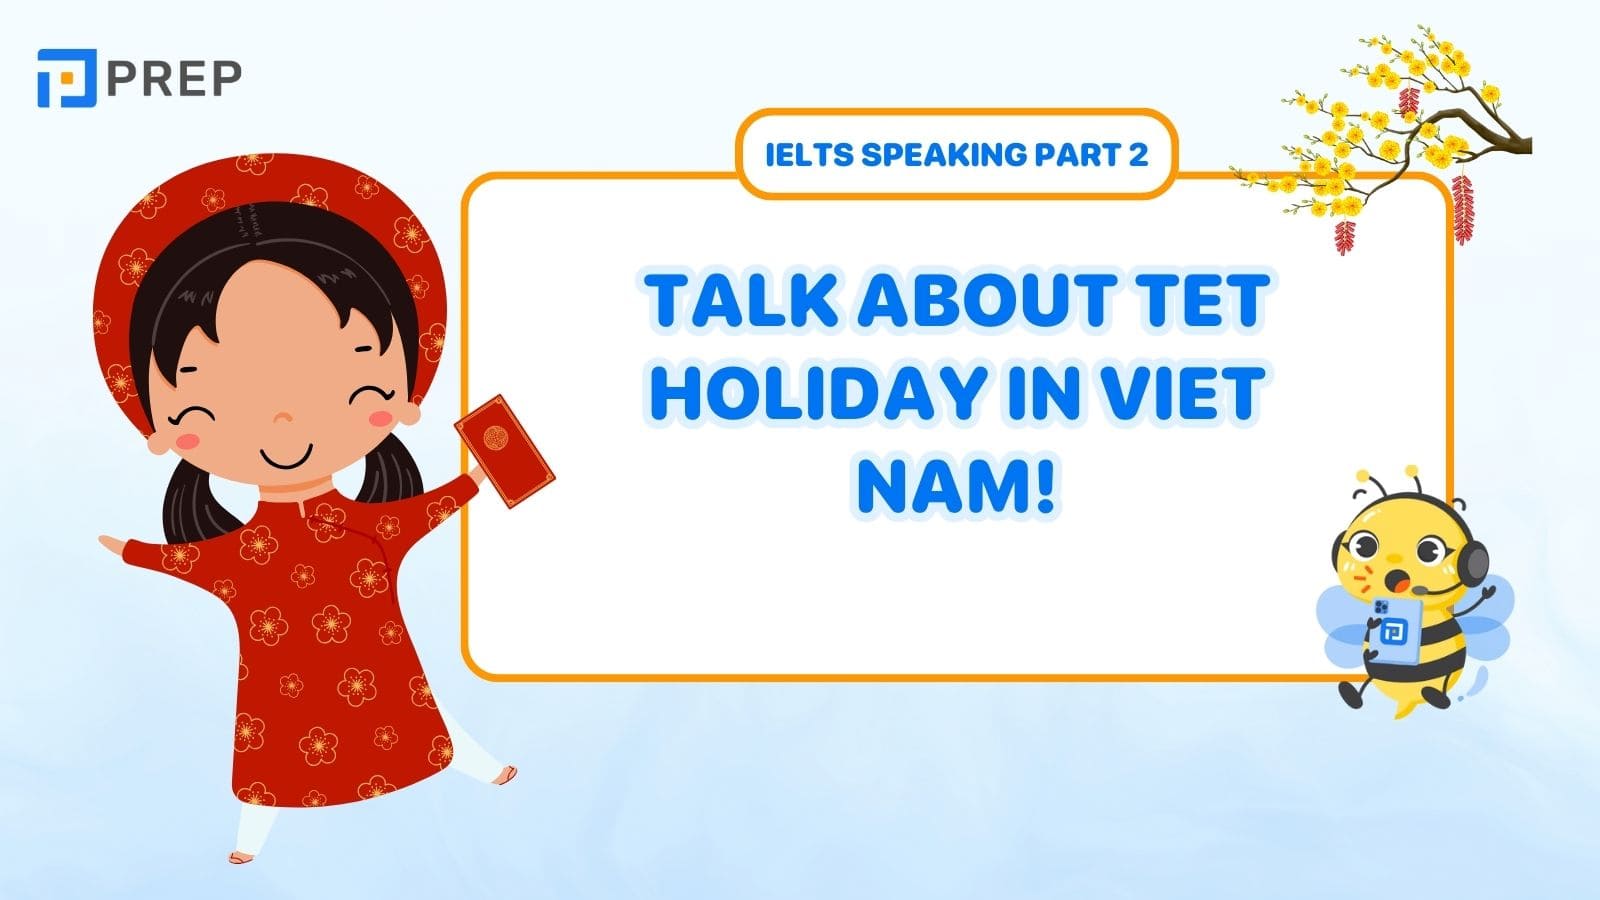 Talk about Tet holiday in Vietnam